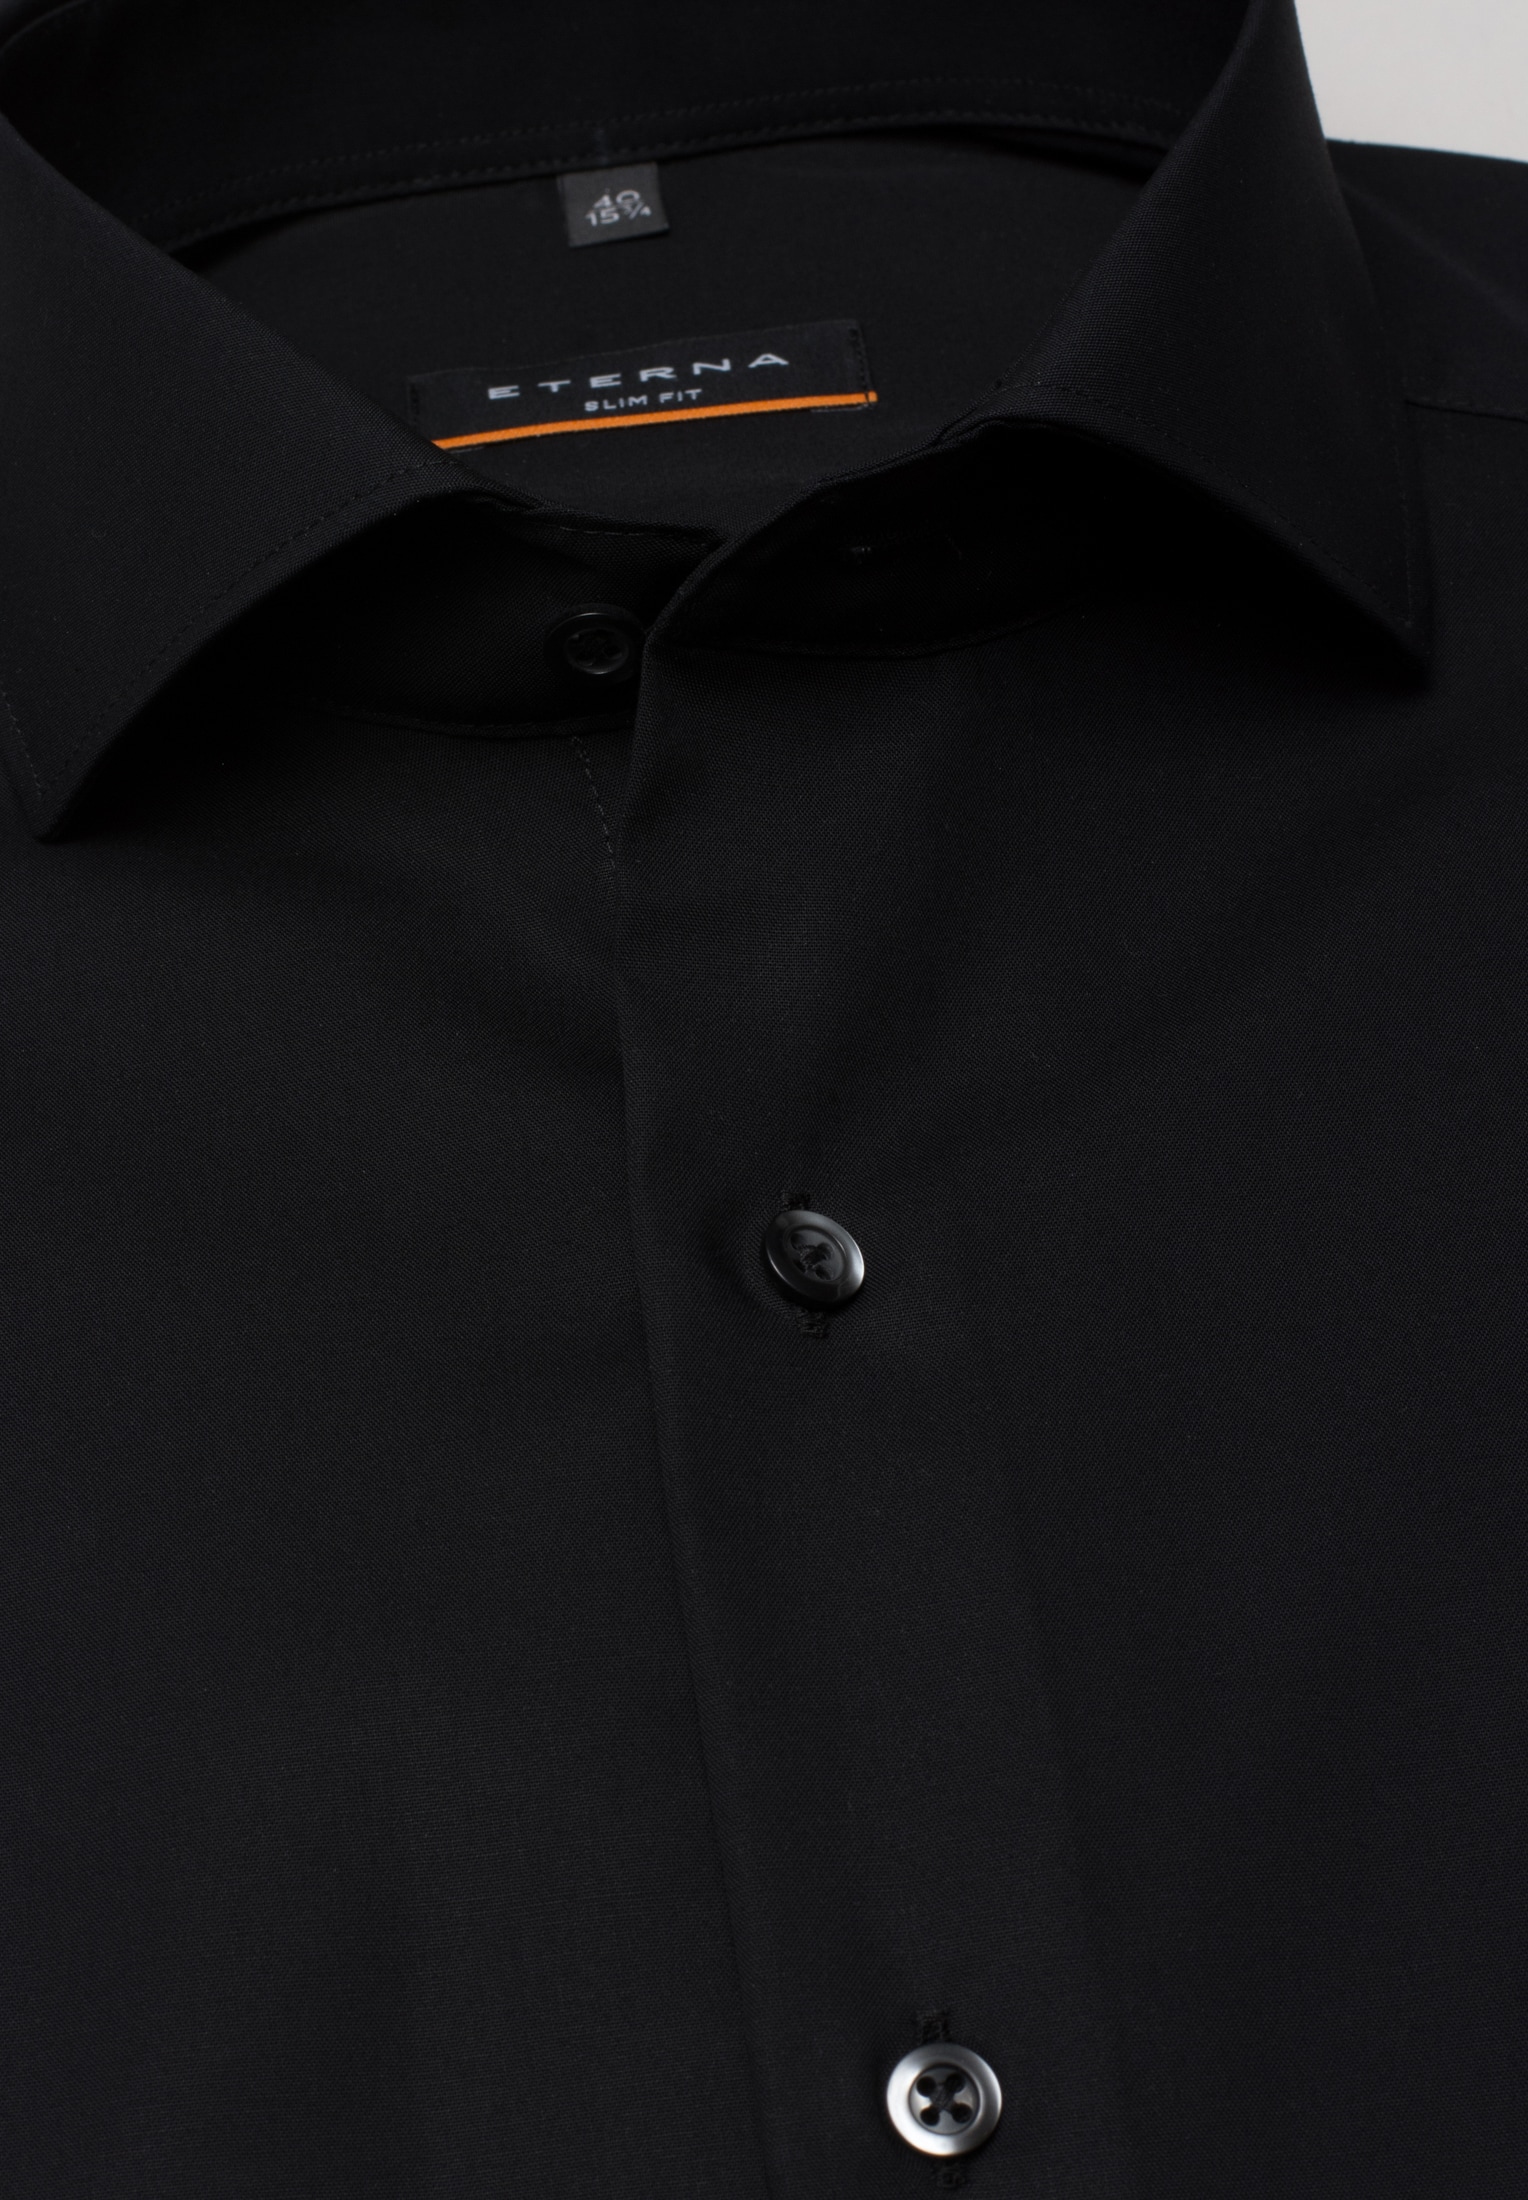 SLIM FIT Original unifarben | | | schwarz | Shirt 37 1SH00102-03-91-37-1/1 in Langarm schwarz